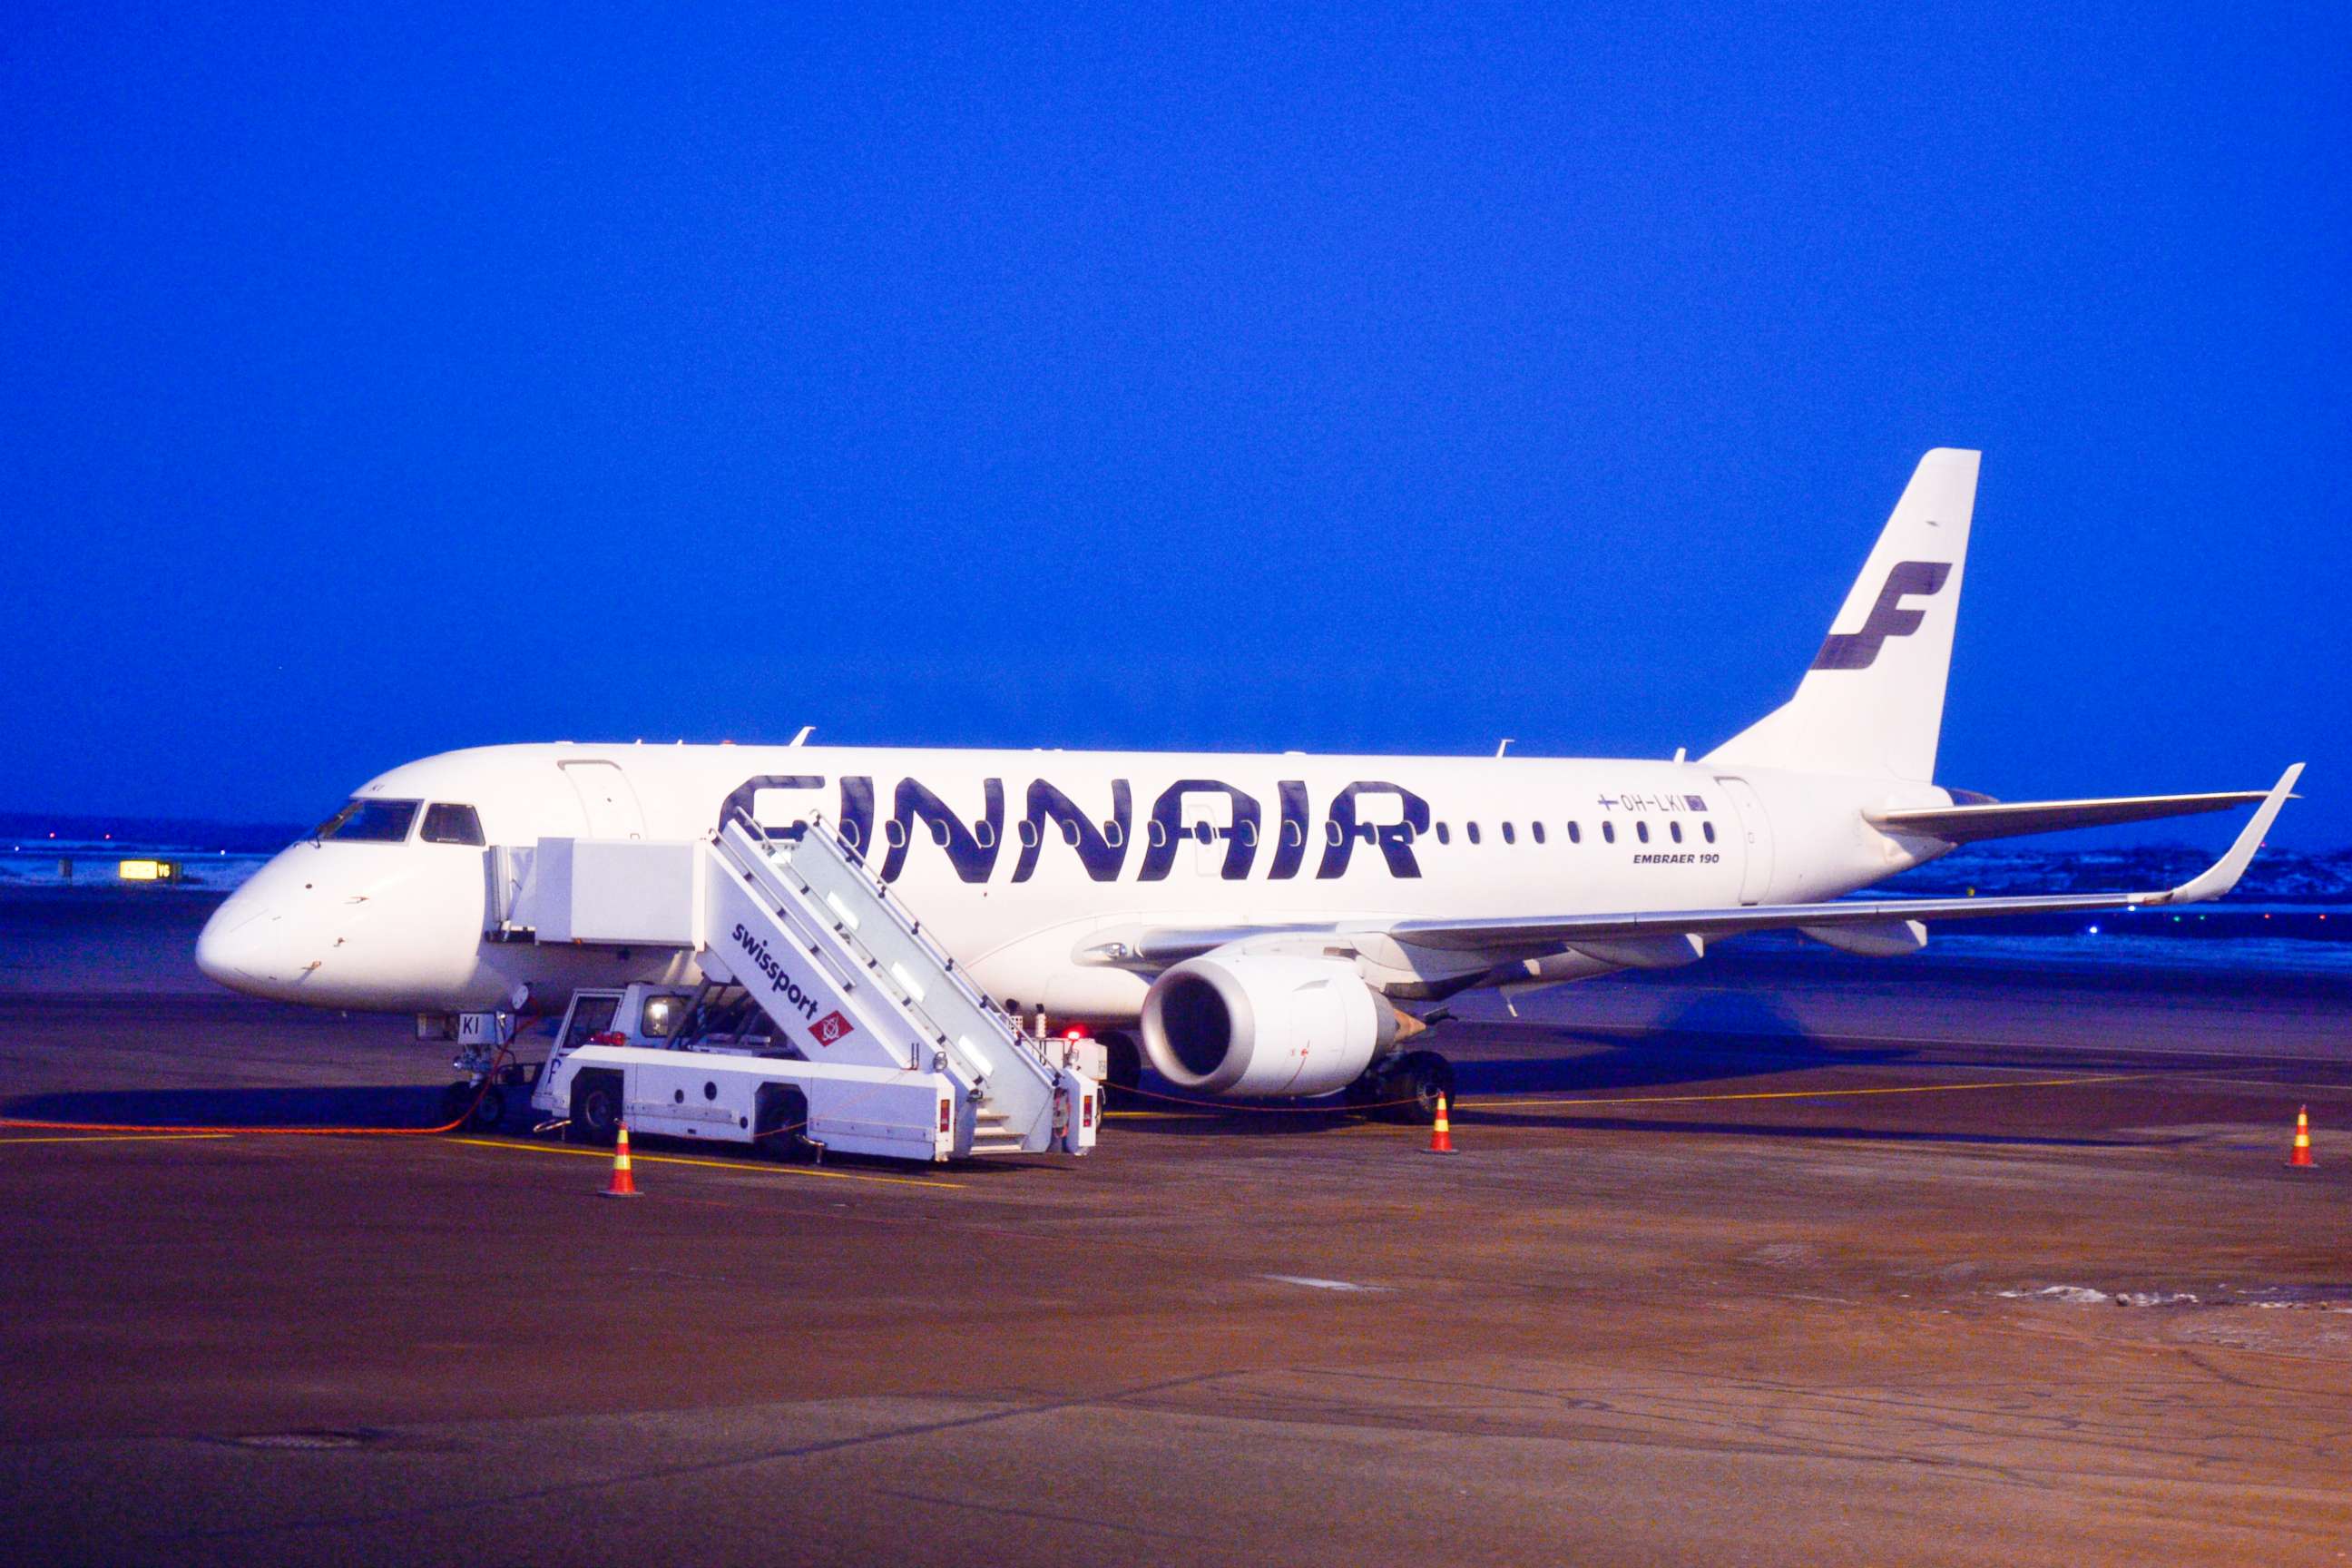 PHOTO: A view of a Finnair plane docked at Helsinki-Vantaa Airport, March 6, 2017.